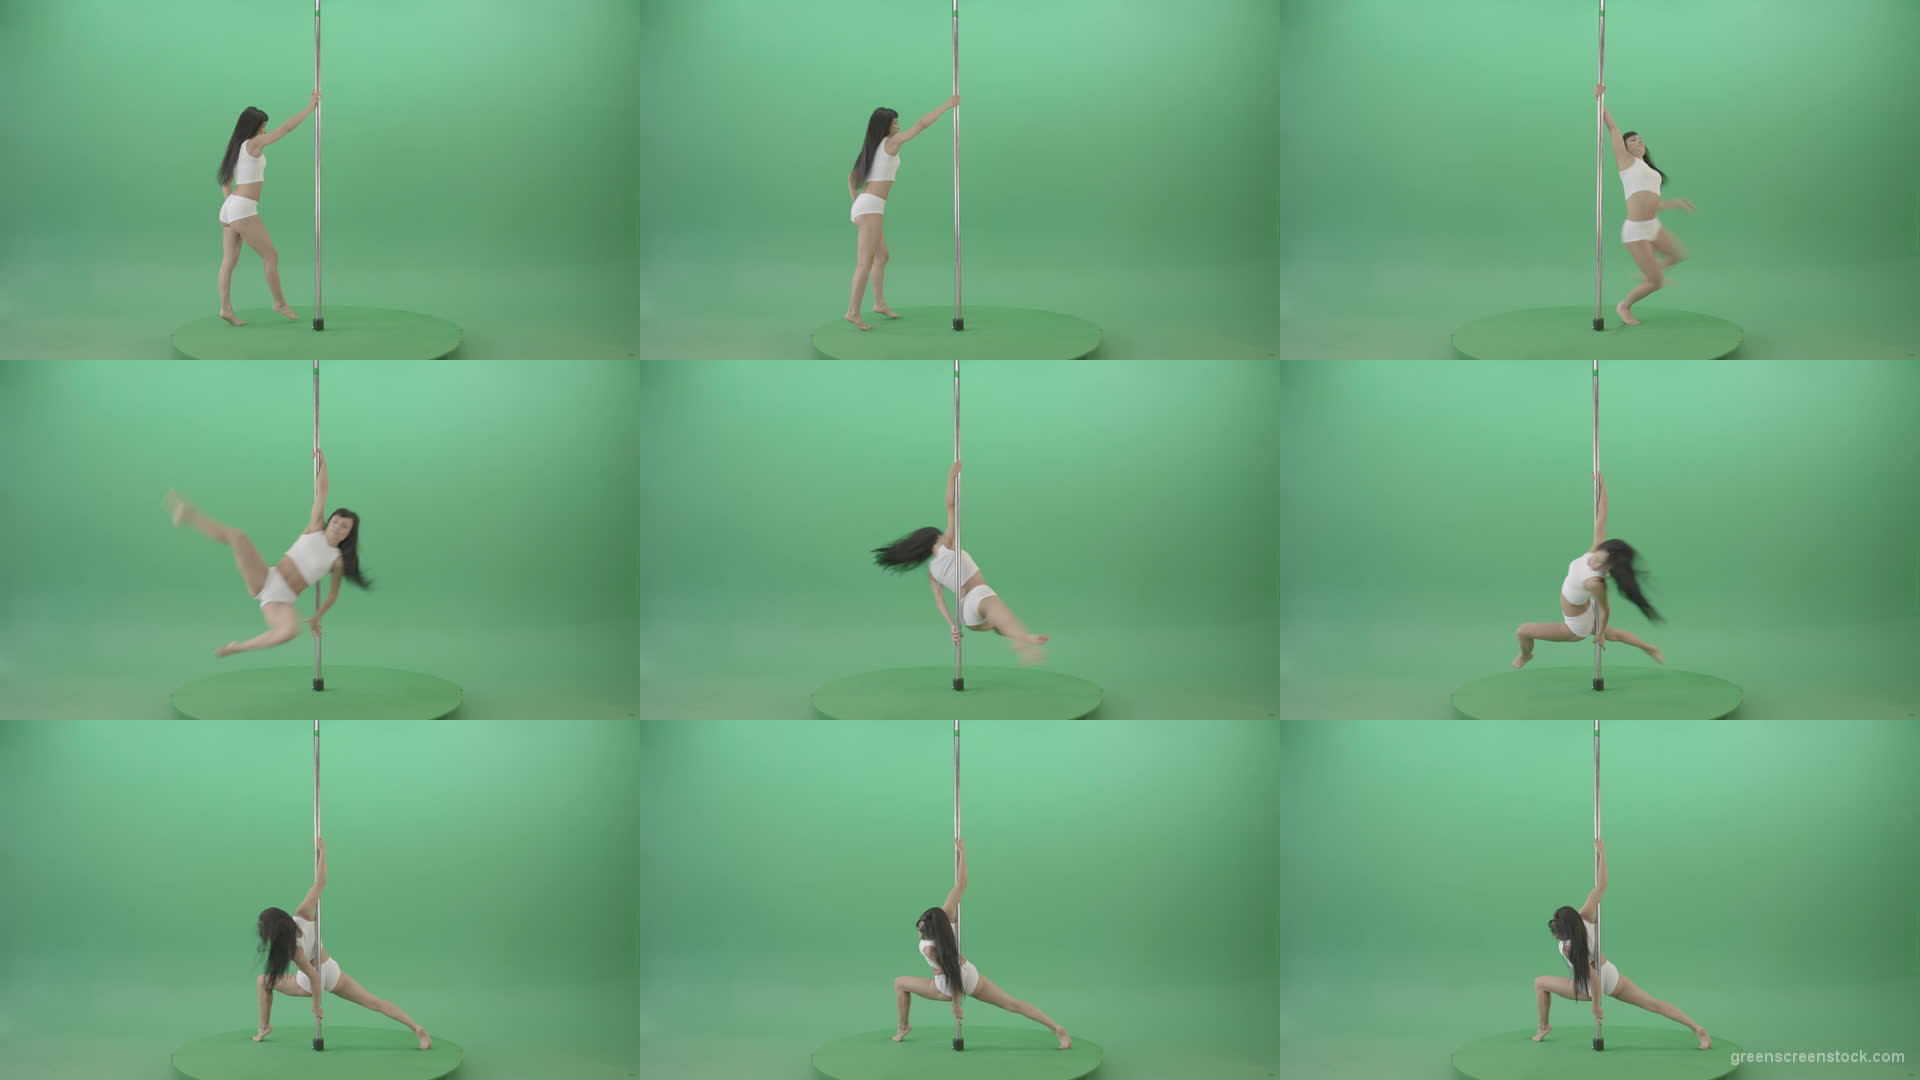 Acrobatic-gymnastics-making-spin-element-on-Pole-Pilon-on-green-screen-4K-Video-Footage-1920 Green Screen Stock